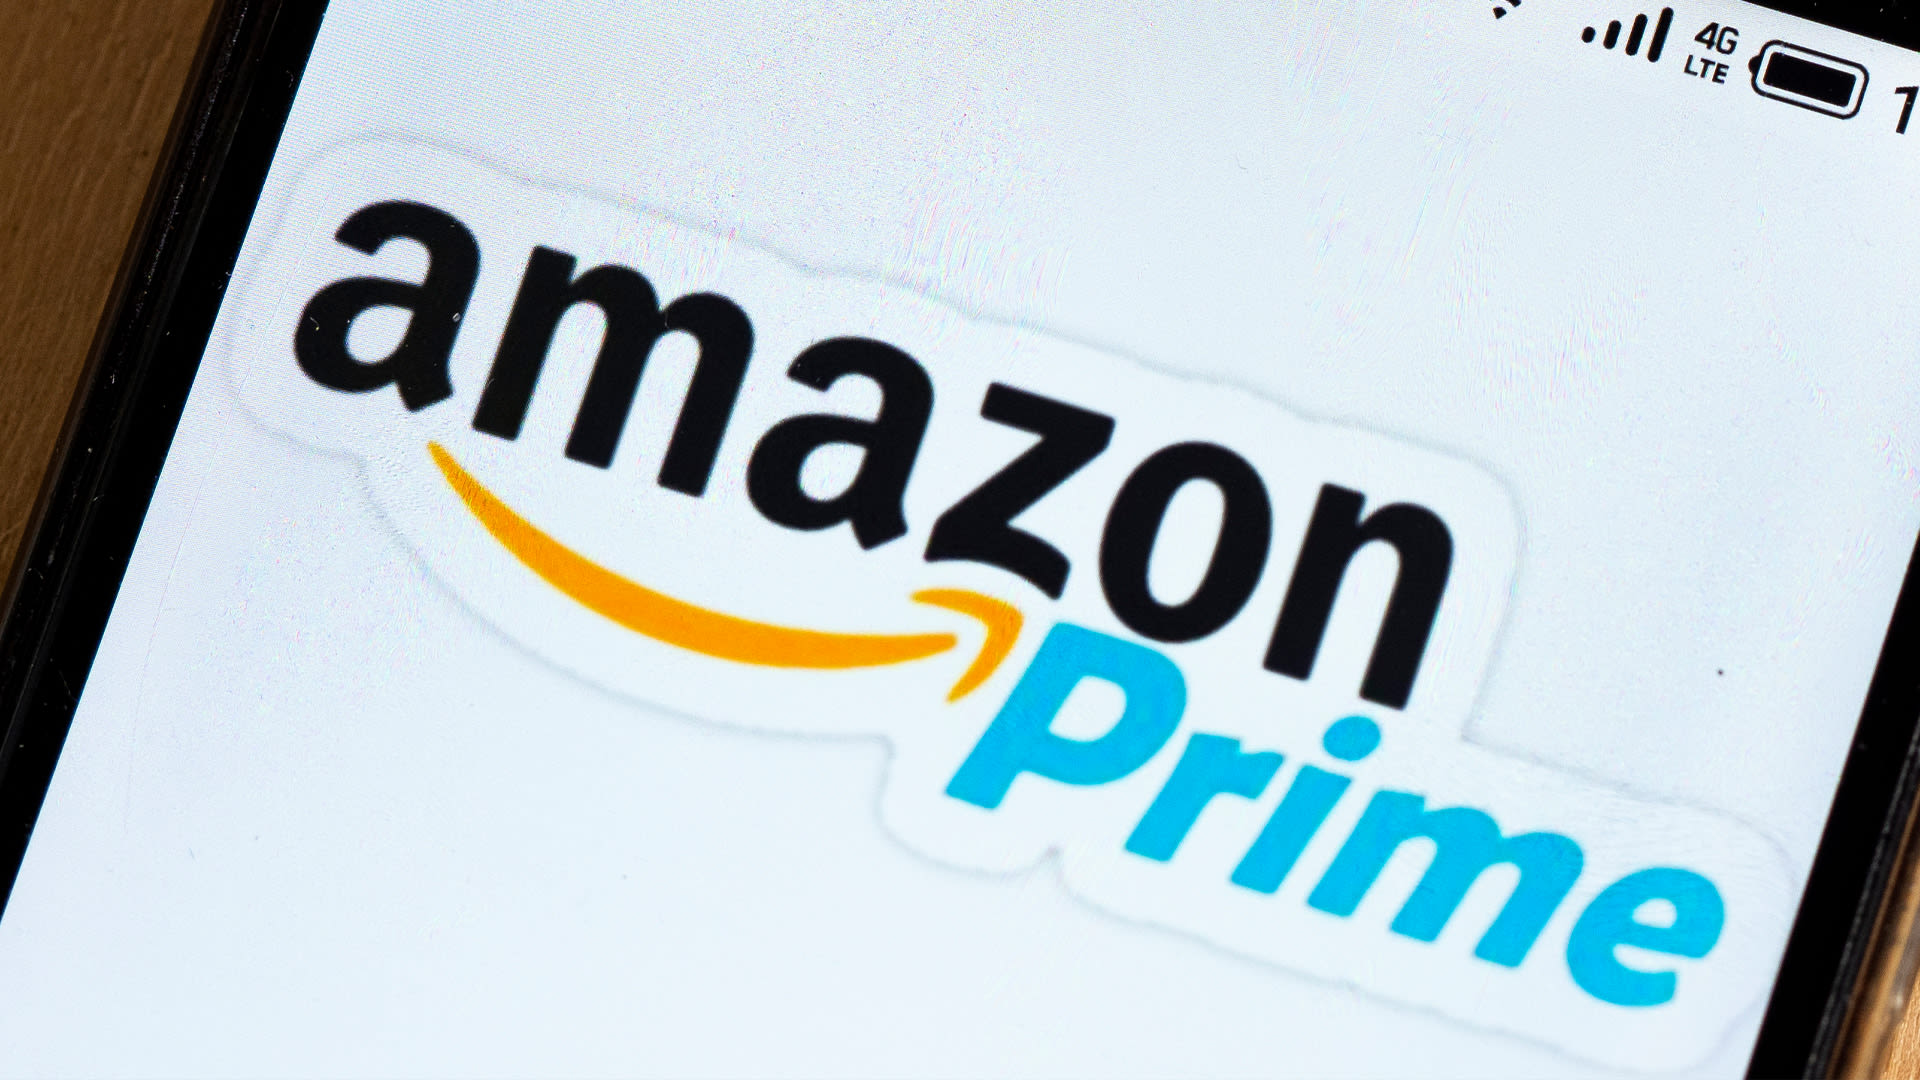 Little-known Amazon Prime perk unlocks free 'advance' movie tickets